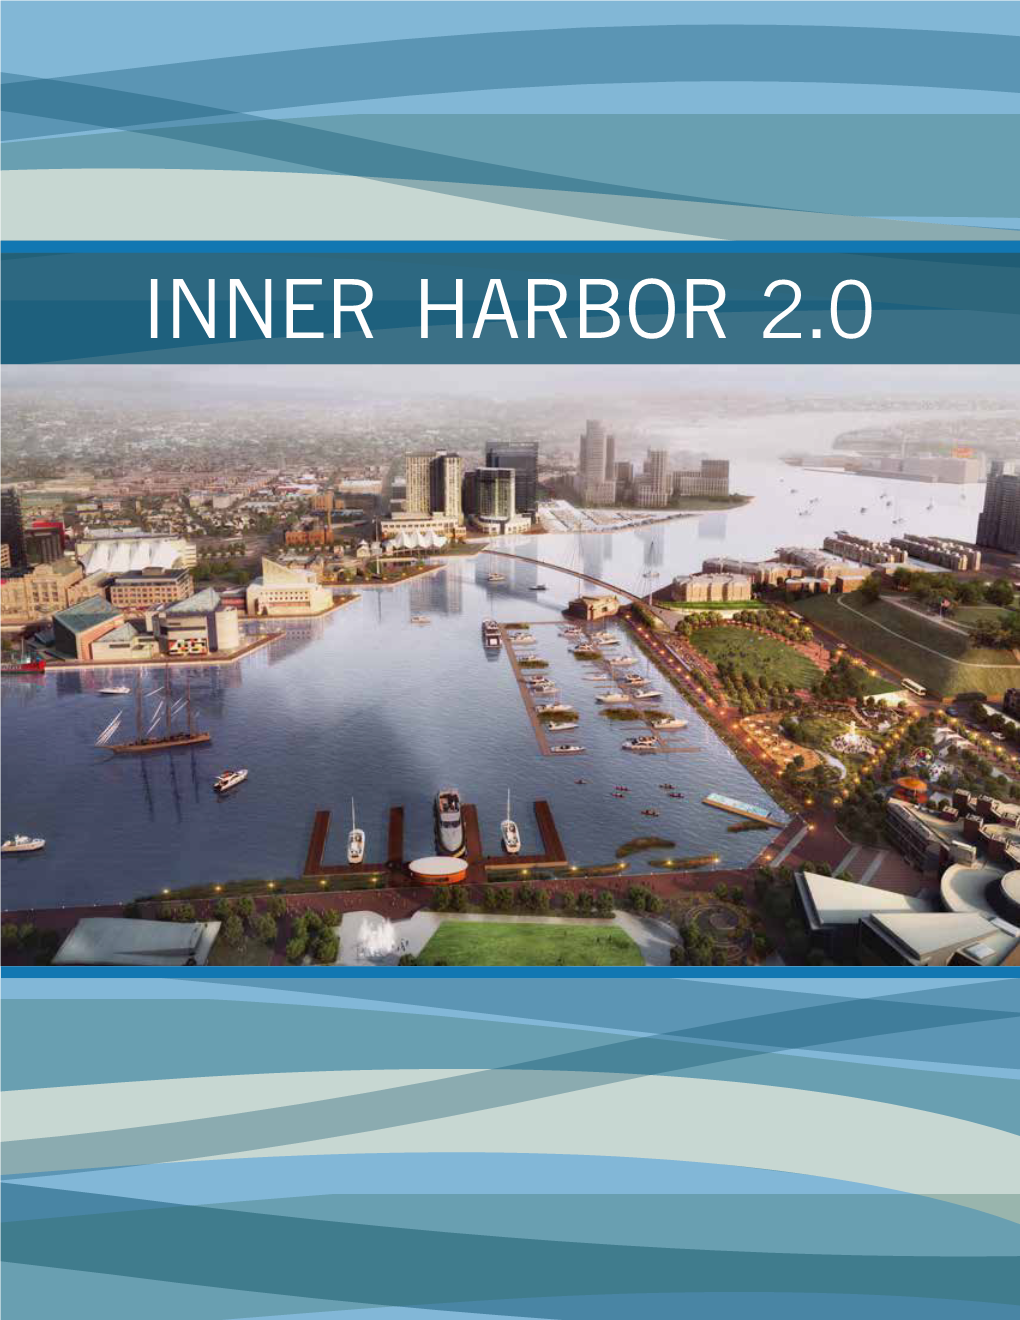 Inner Harbor 2.0 IT’S HARD to BELIEVE the INNER HARBOR IS 40 YEARS OLD